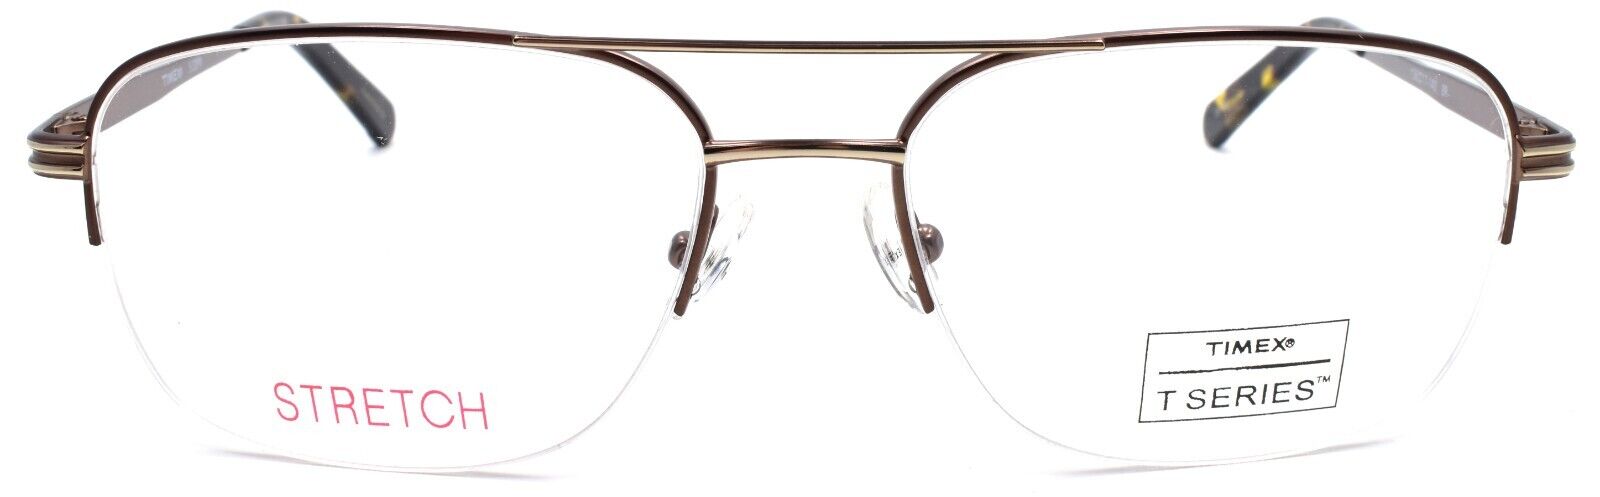 2-Timex 5:20 PM Men's Eyeglasses Frames Aviator Half-rim 56-17-140 Brown-715317196222-IKSpecs